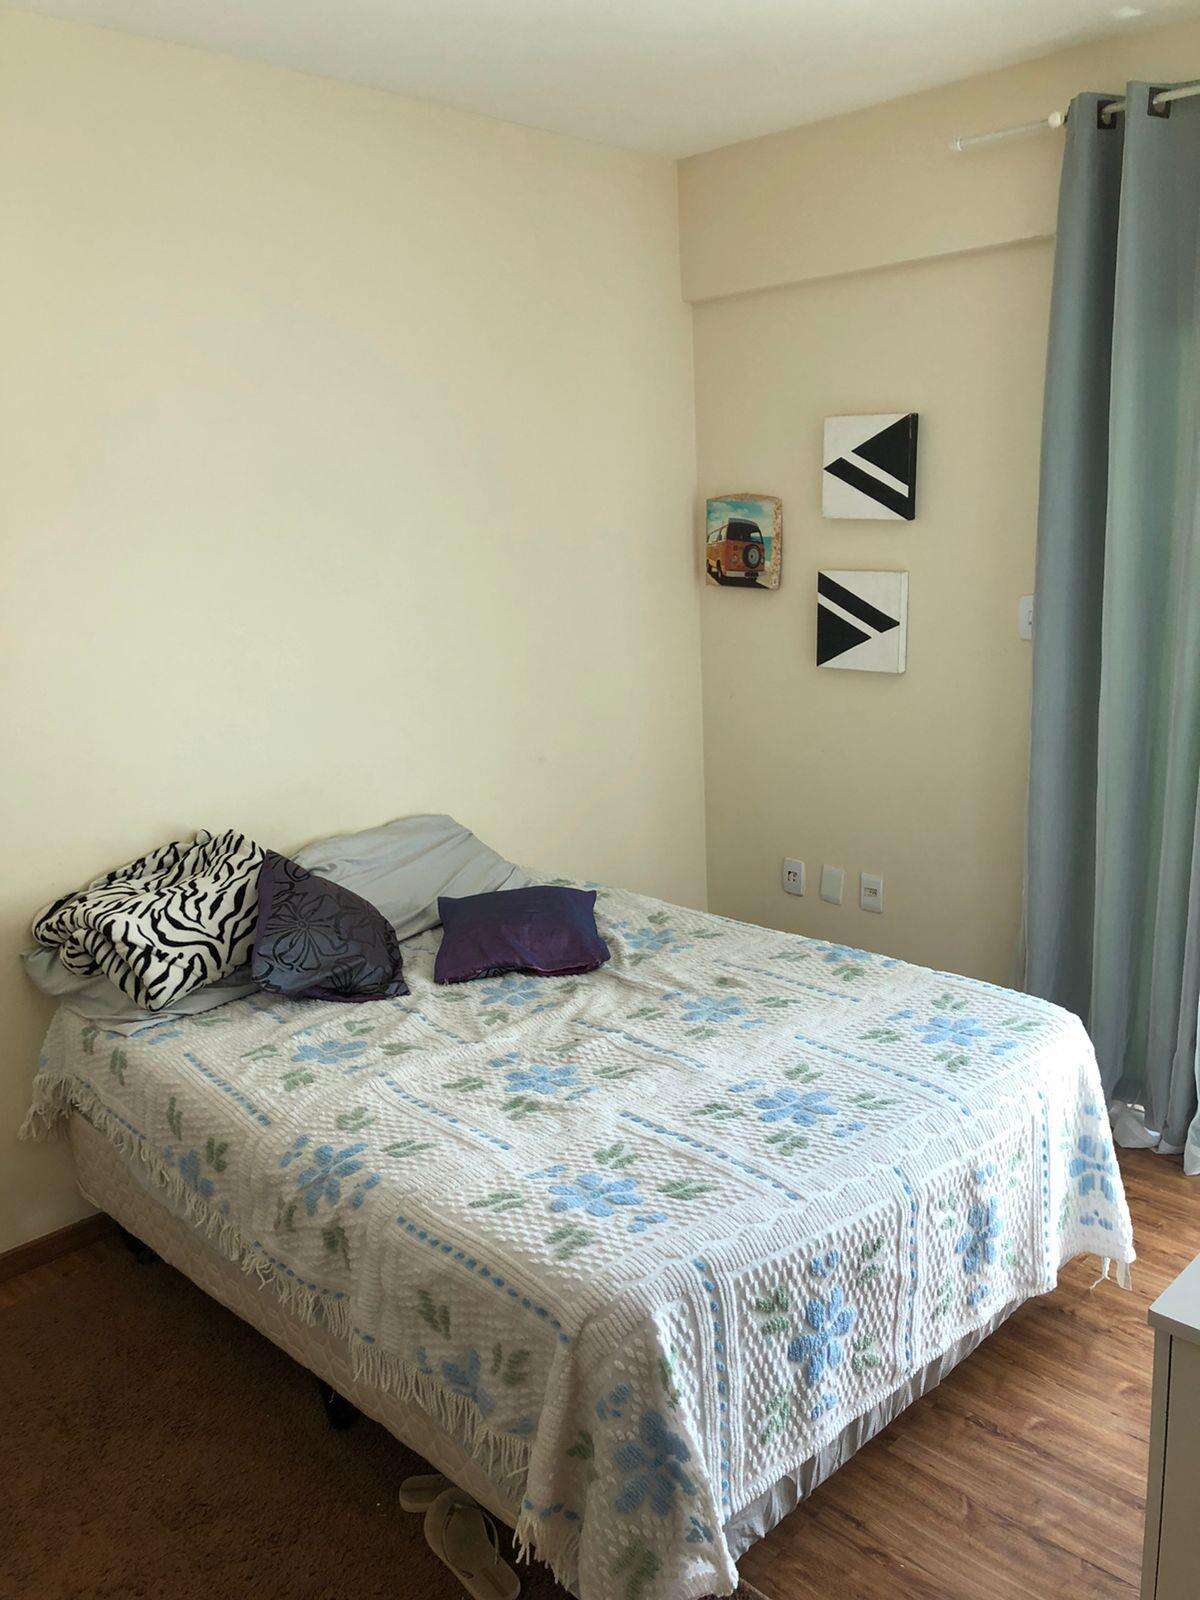 Apartamento 2 quartos à venda no Esplanada: d9450115-c-whatsapp-image-2021-12-10-at-17.18.15-1.jpeg